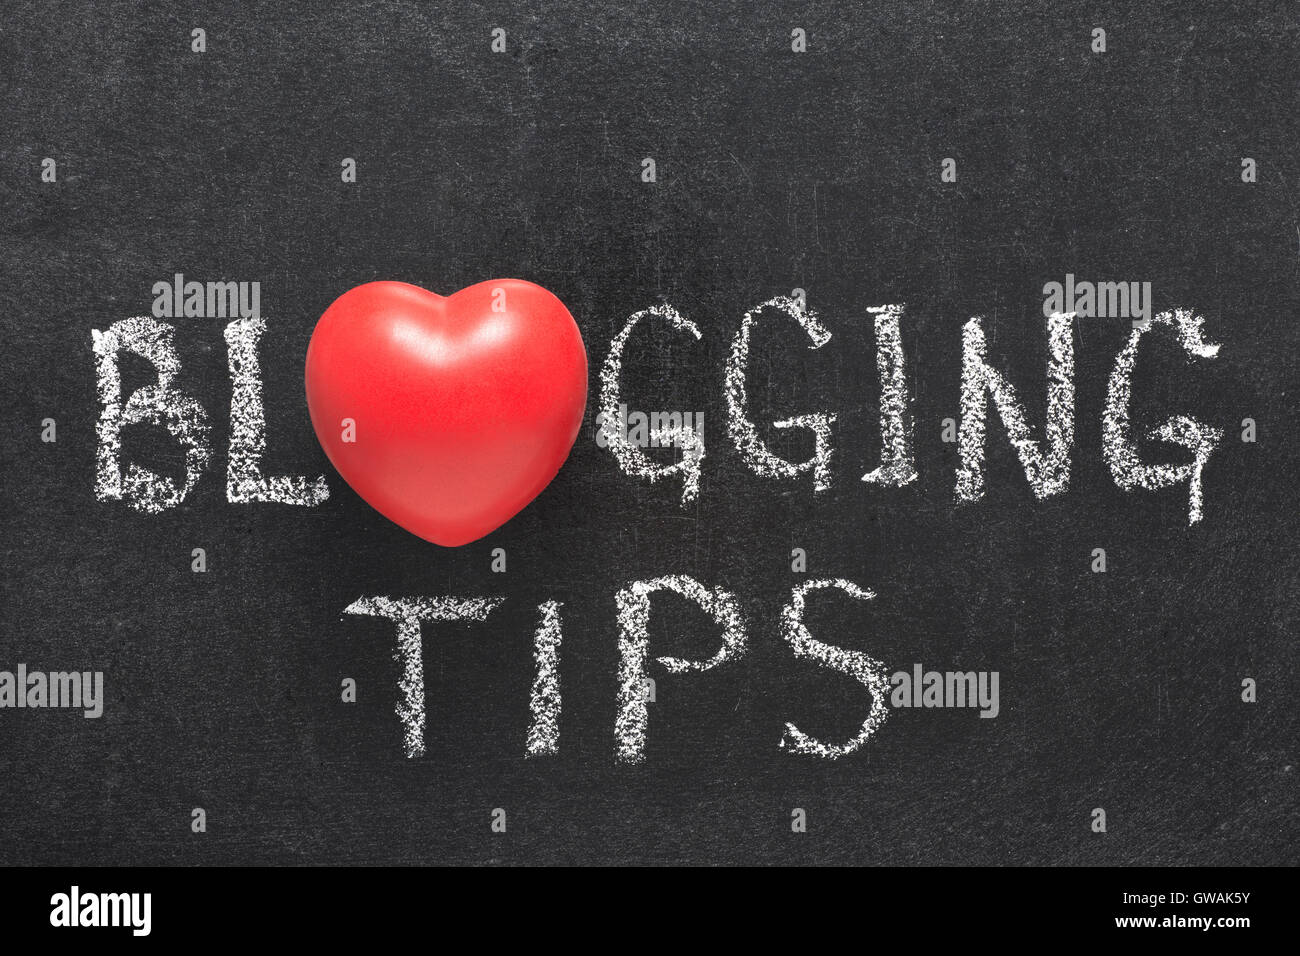 blogging tips phrase handwritten on blackboard with heart symbol instead of O Stock Photo